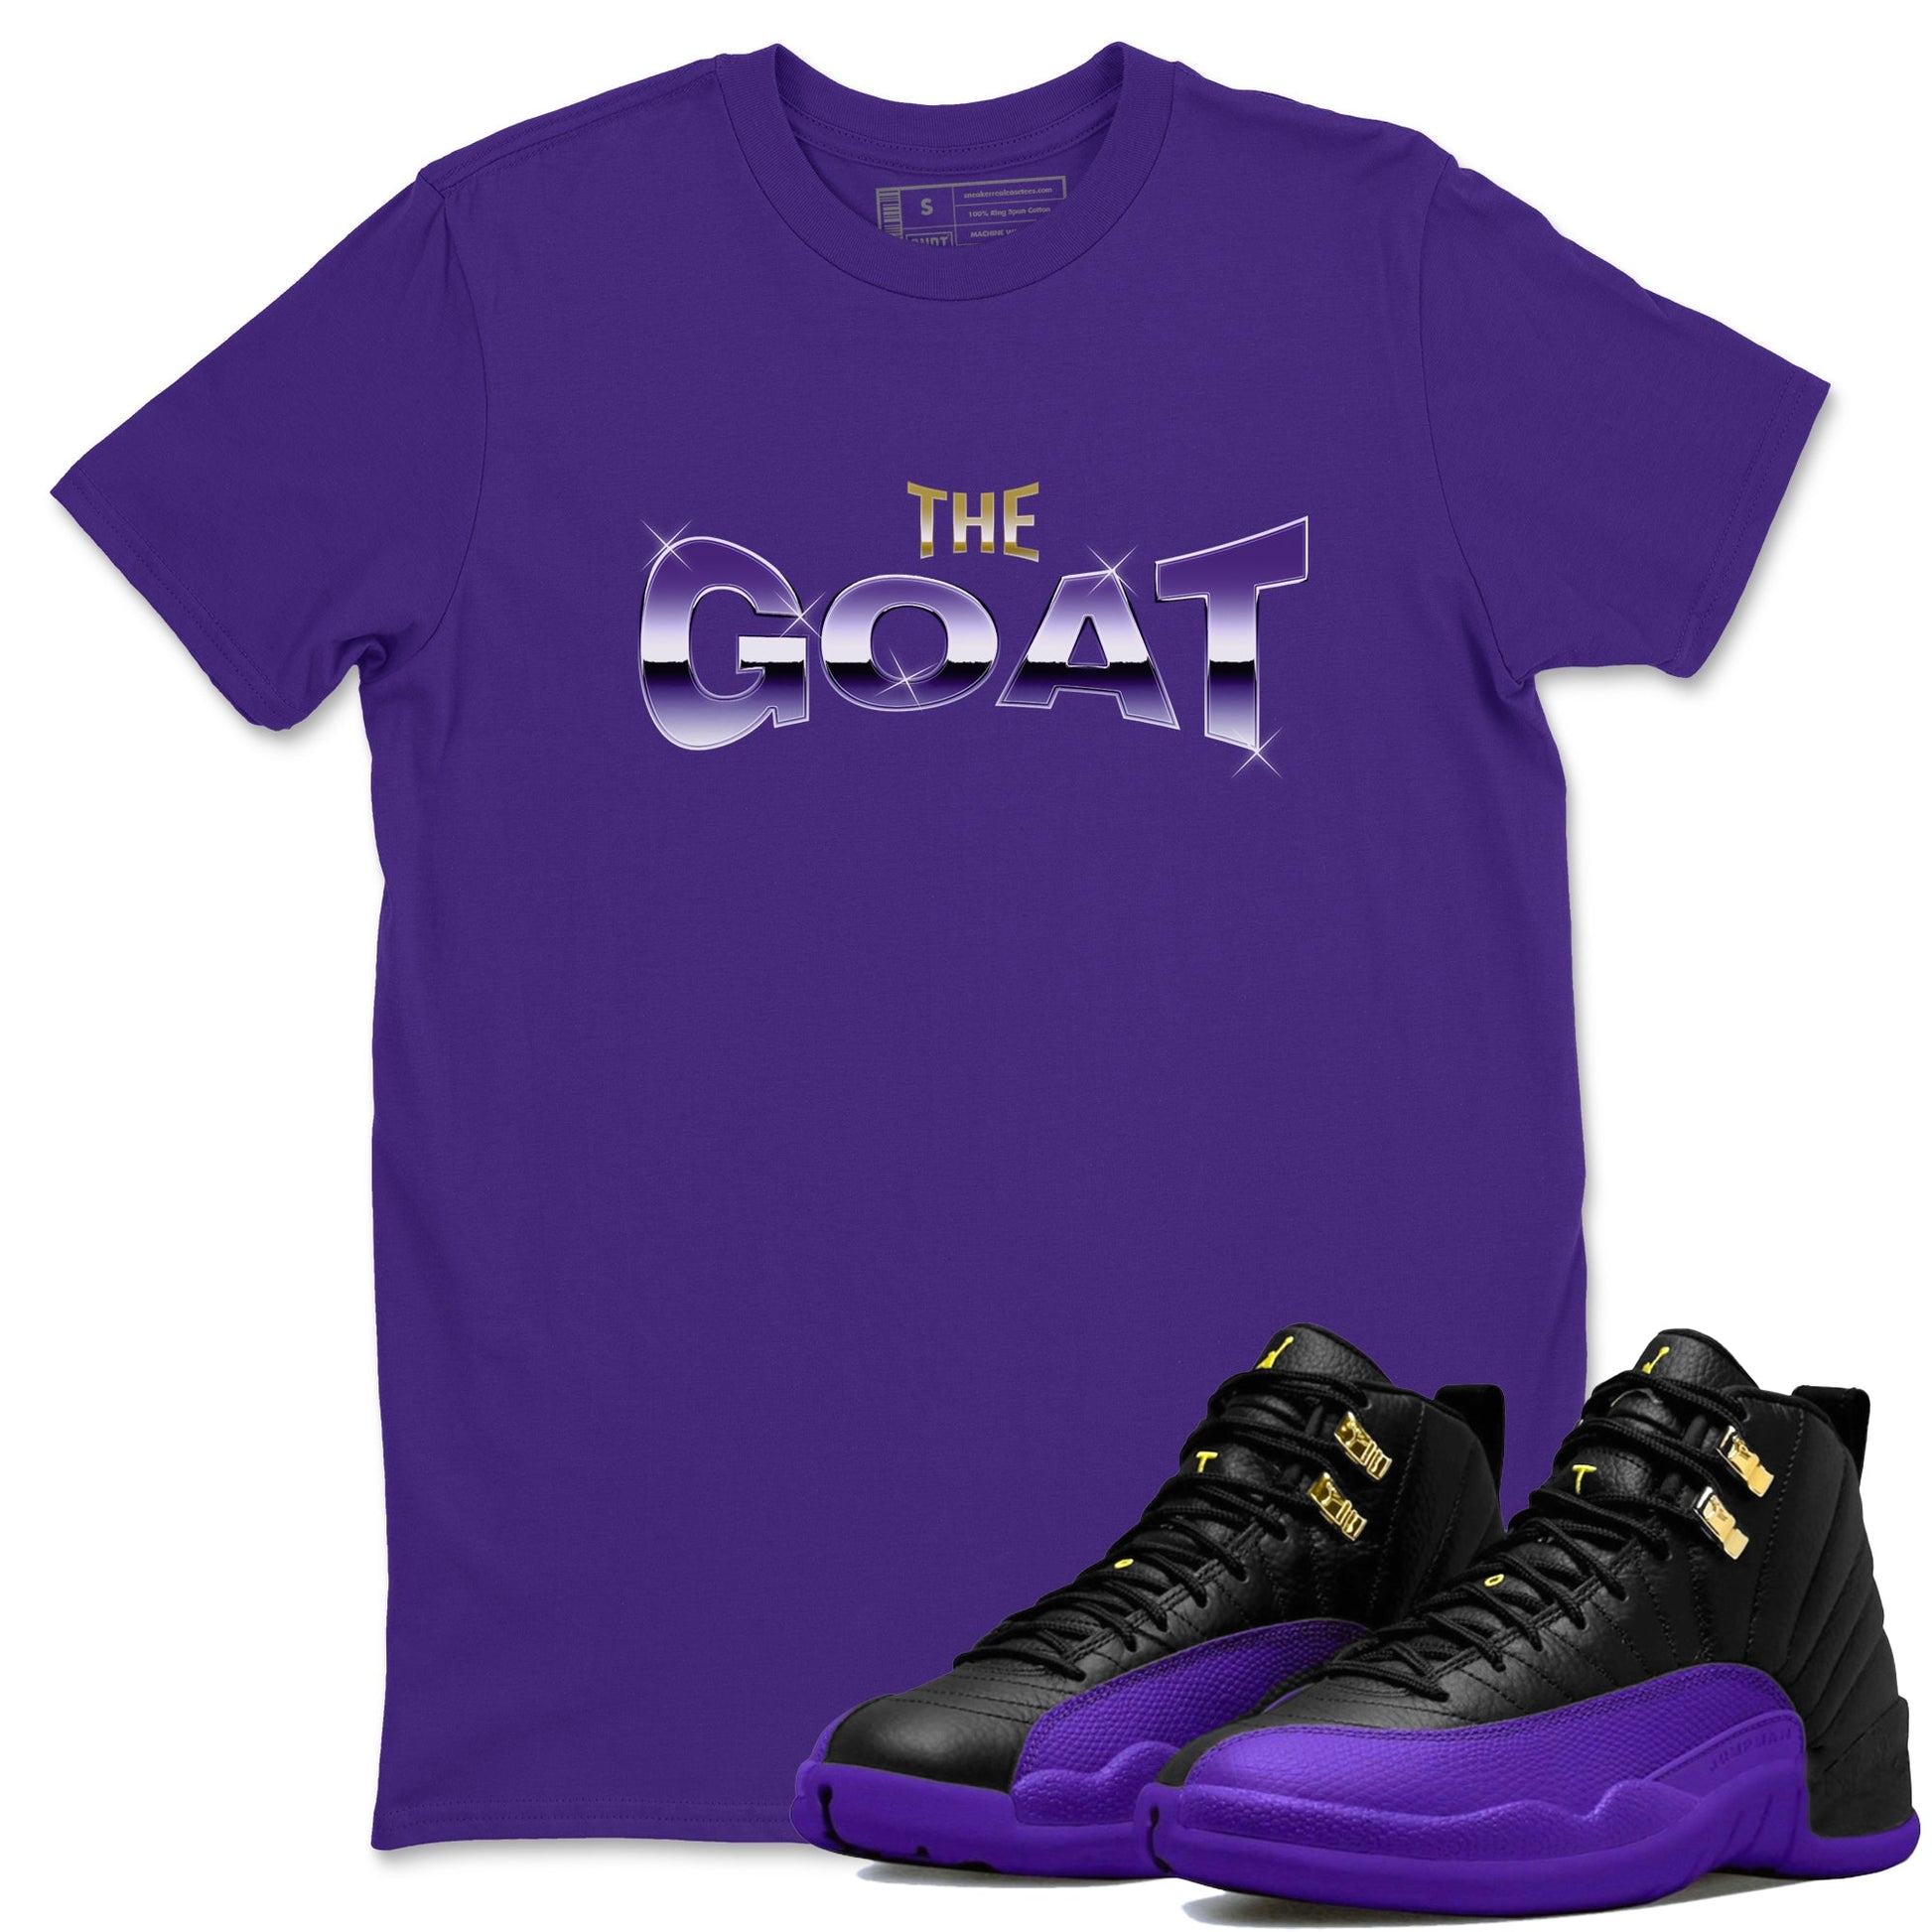 Air Jordan 12 Field Purple Sneaker Match Tees The Goat Sneaker Tees AJ12 Field Purple Sneaker Release Tees Unisex Shirts Purple 1